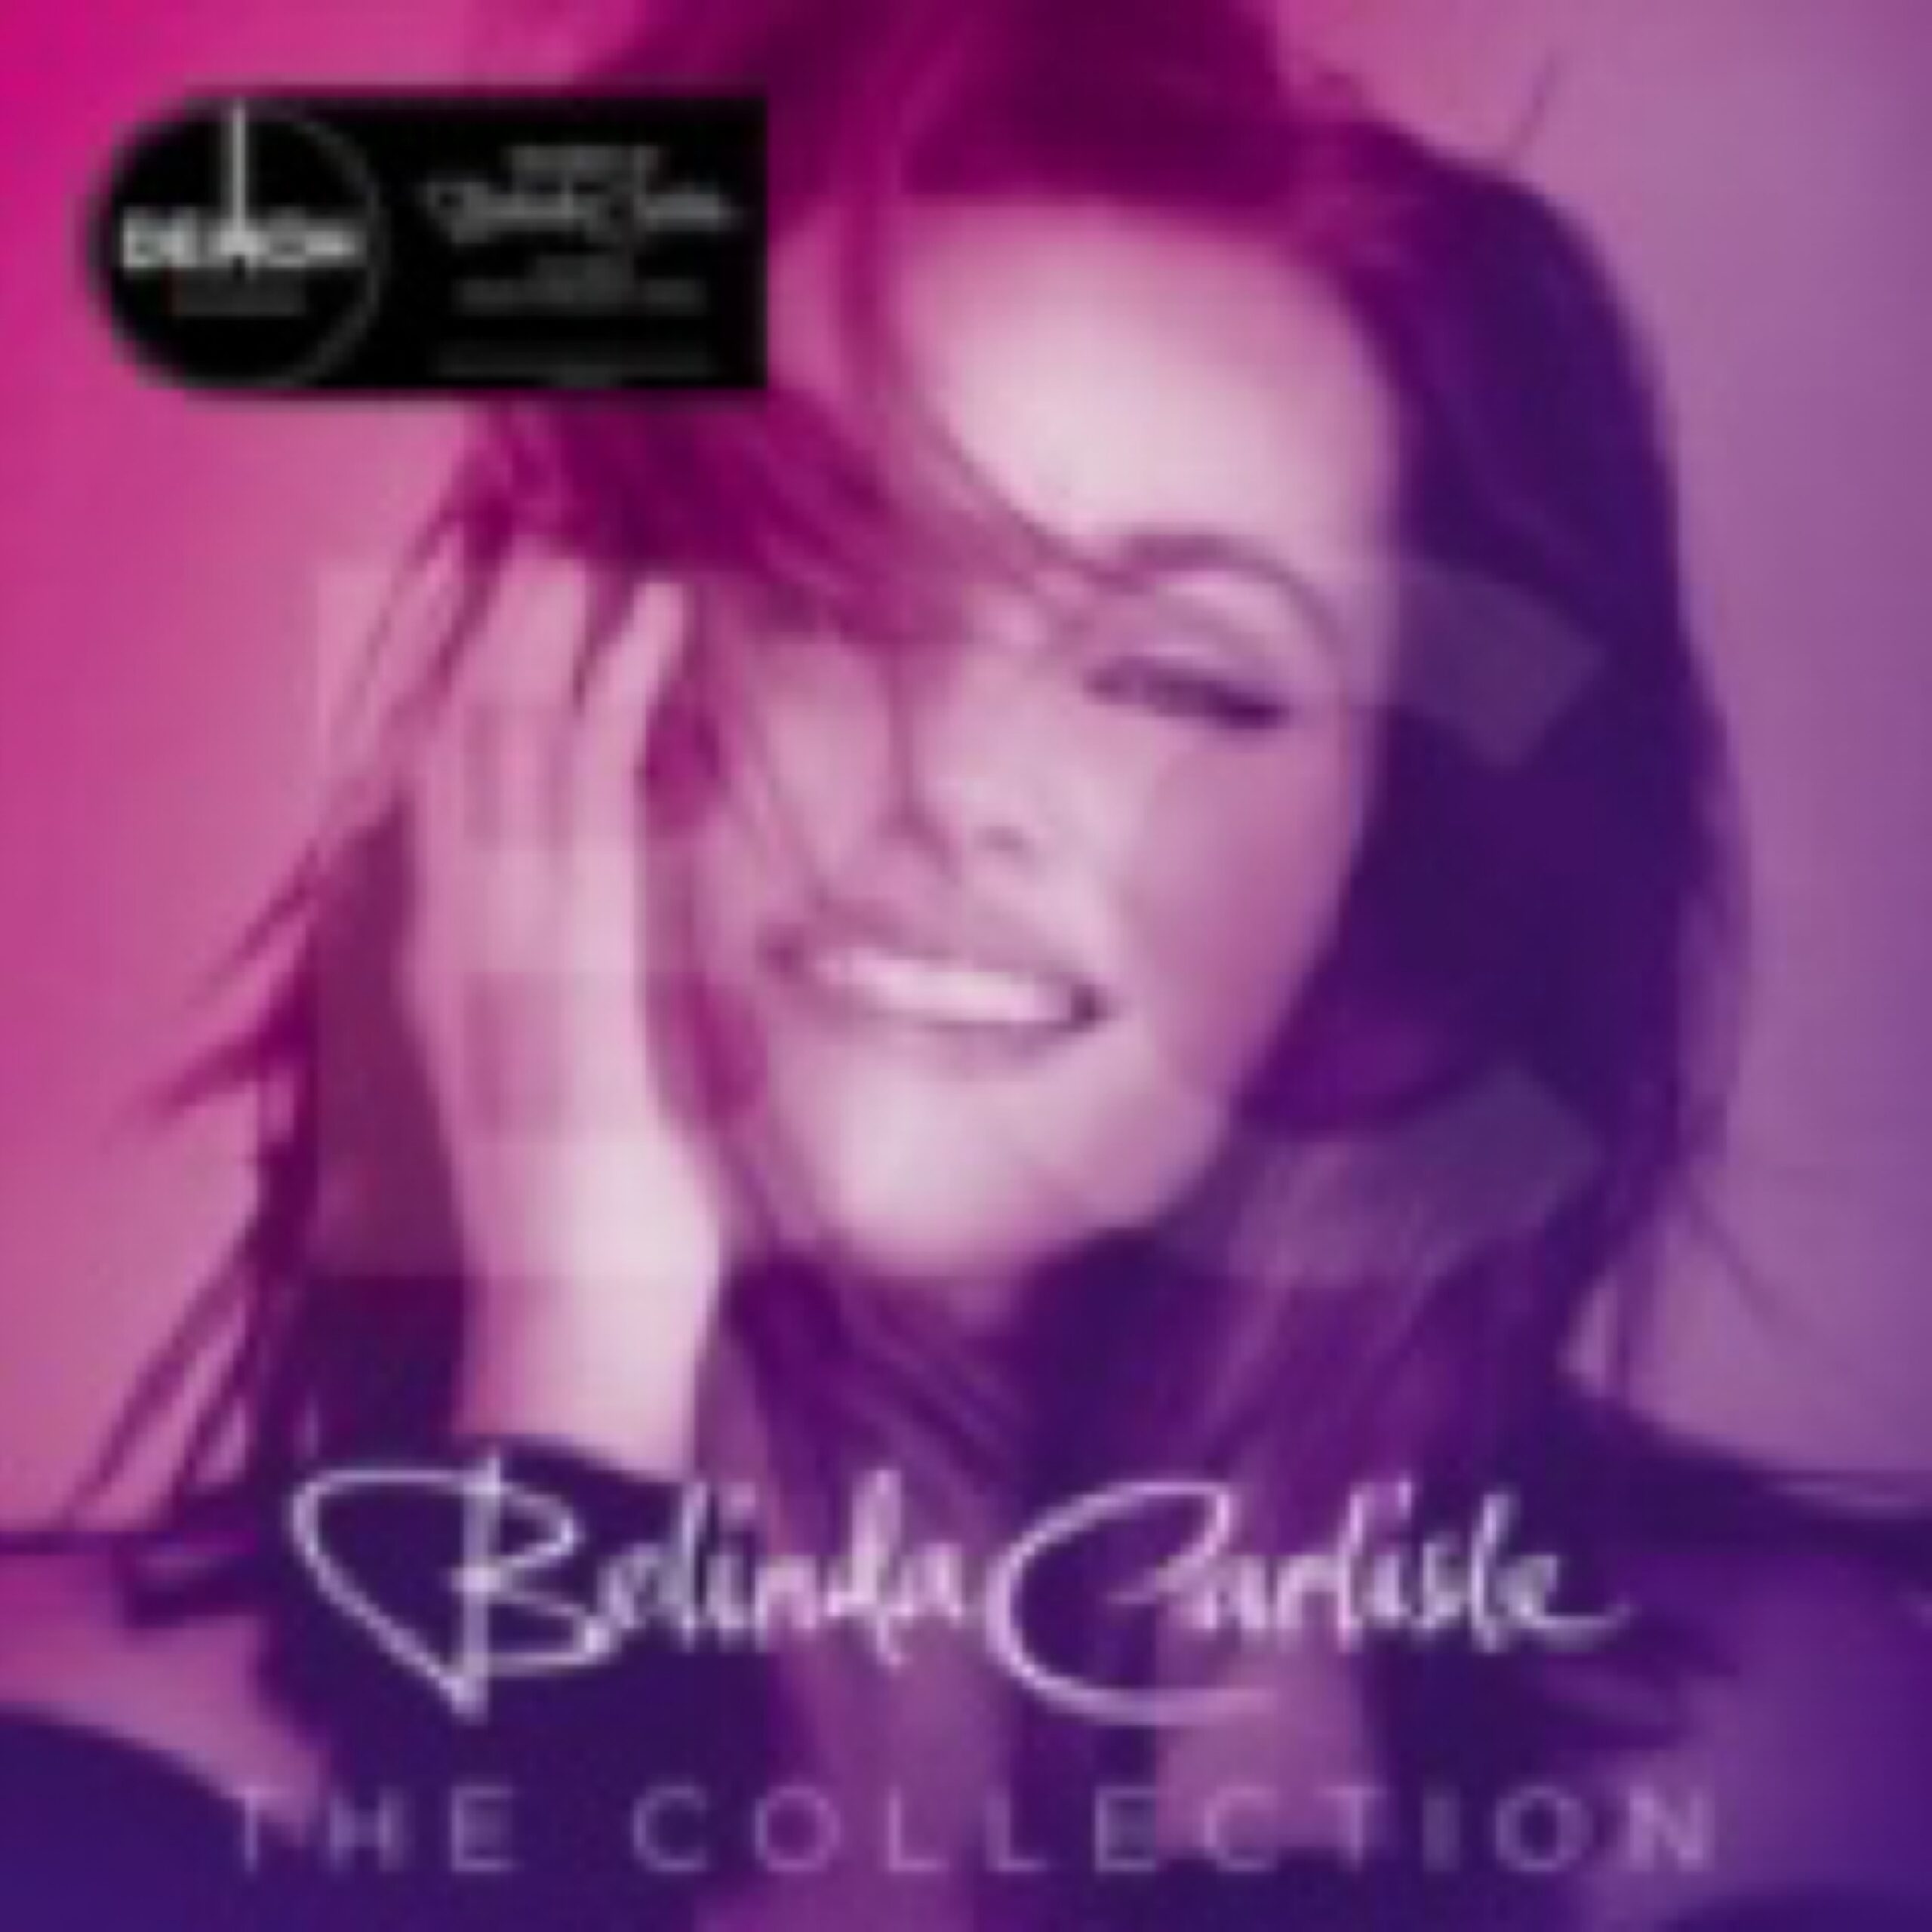 Belinda Carlisle Collection Dig It Record Barn